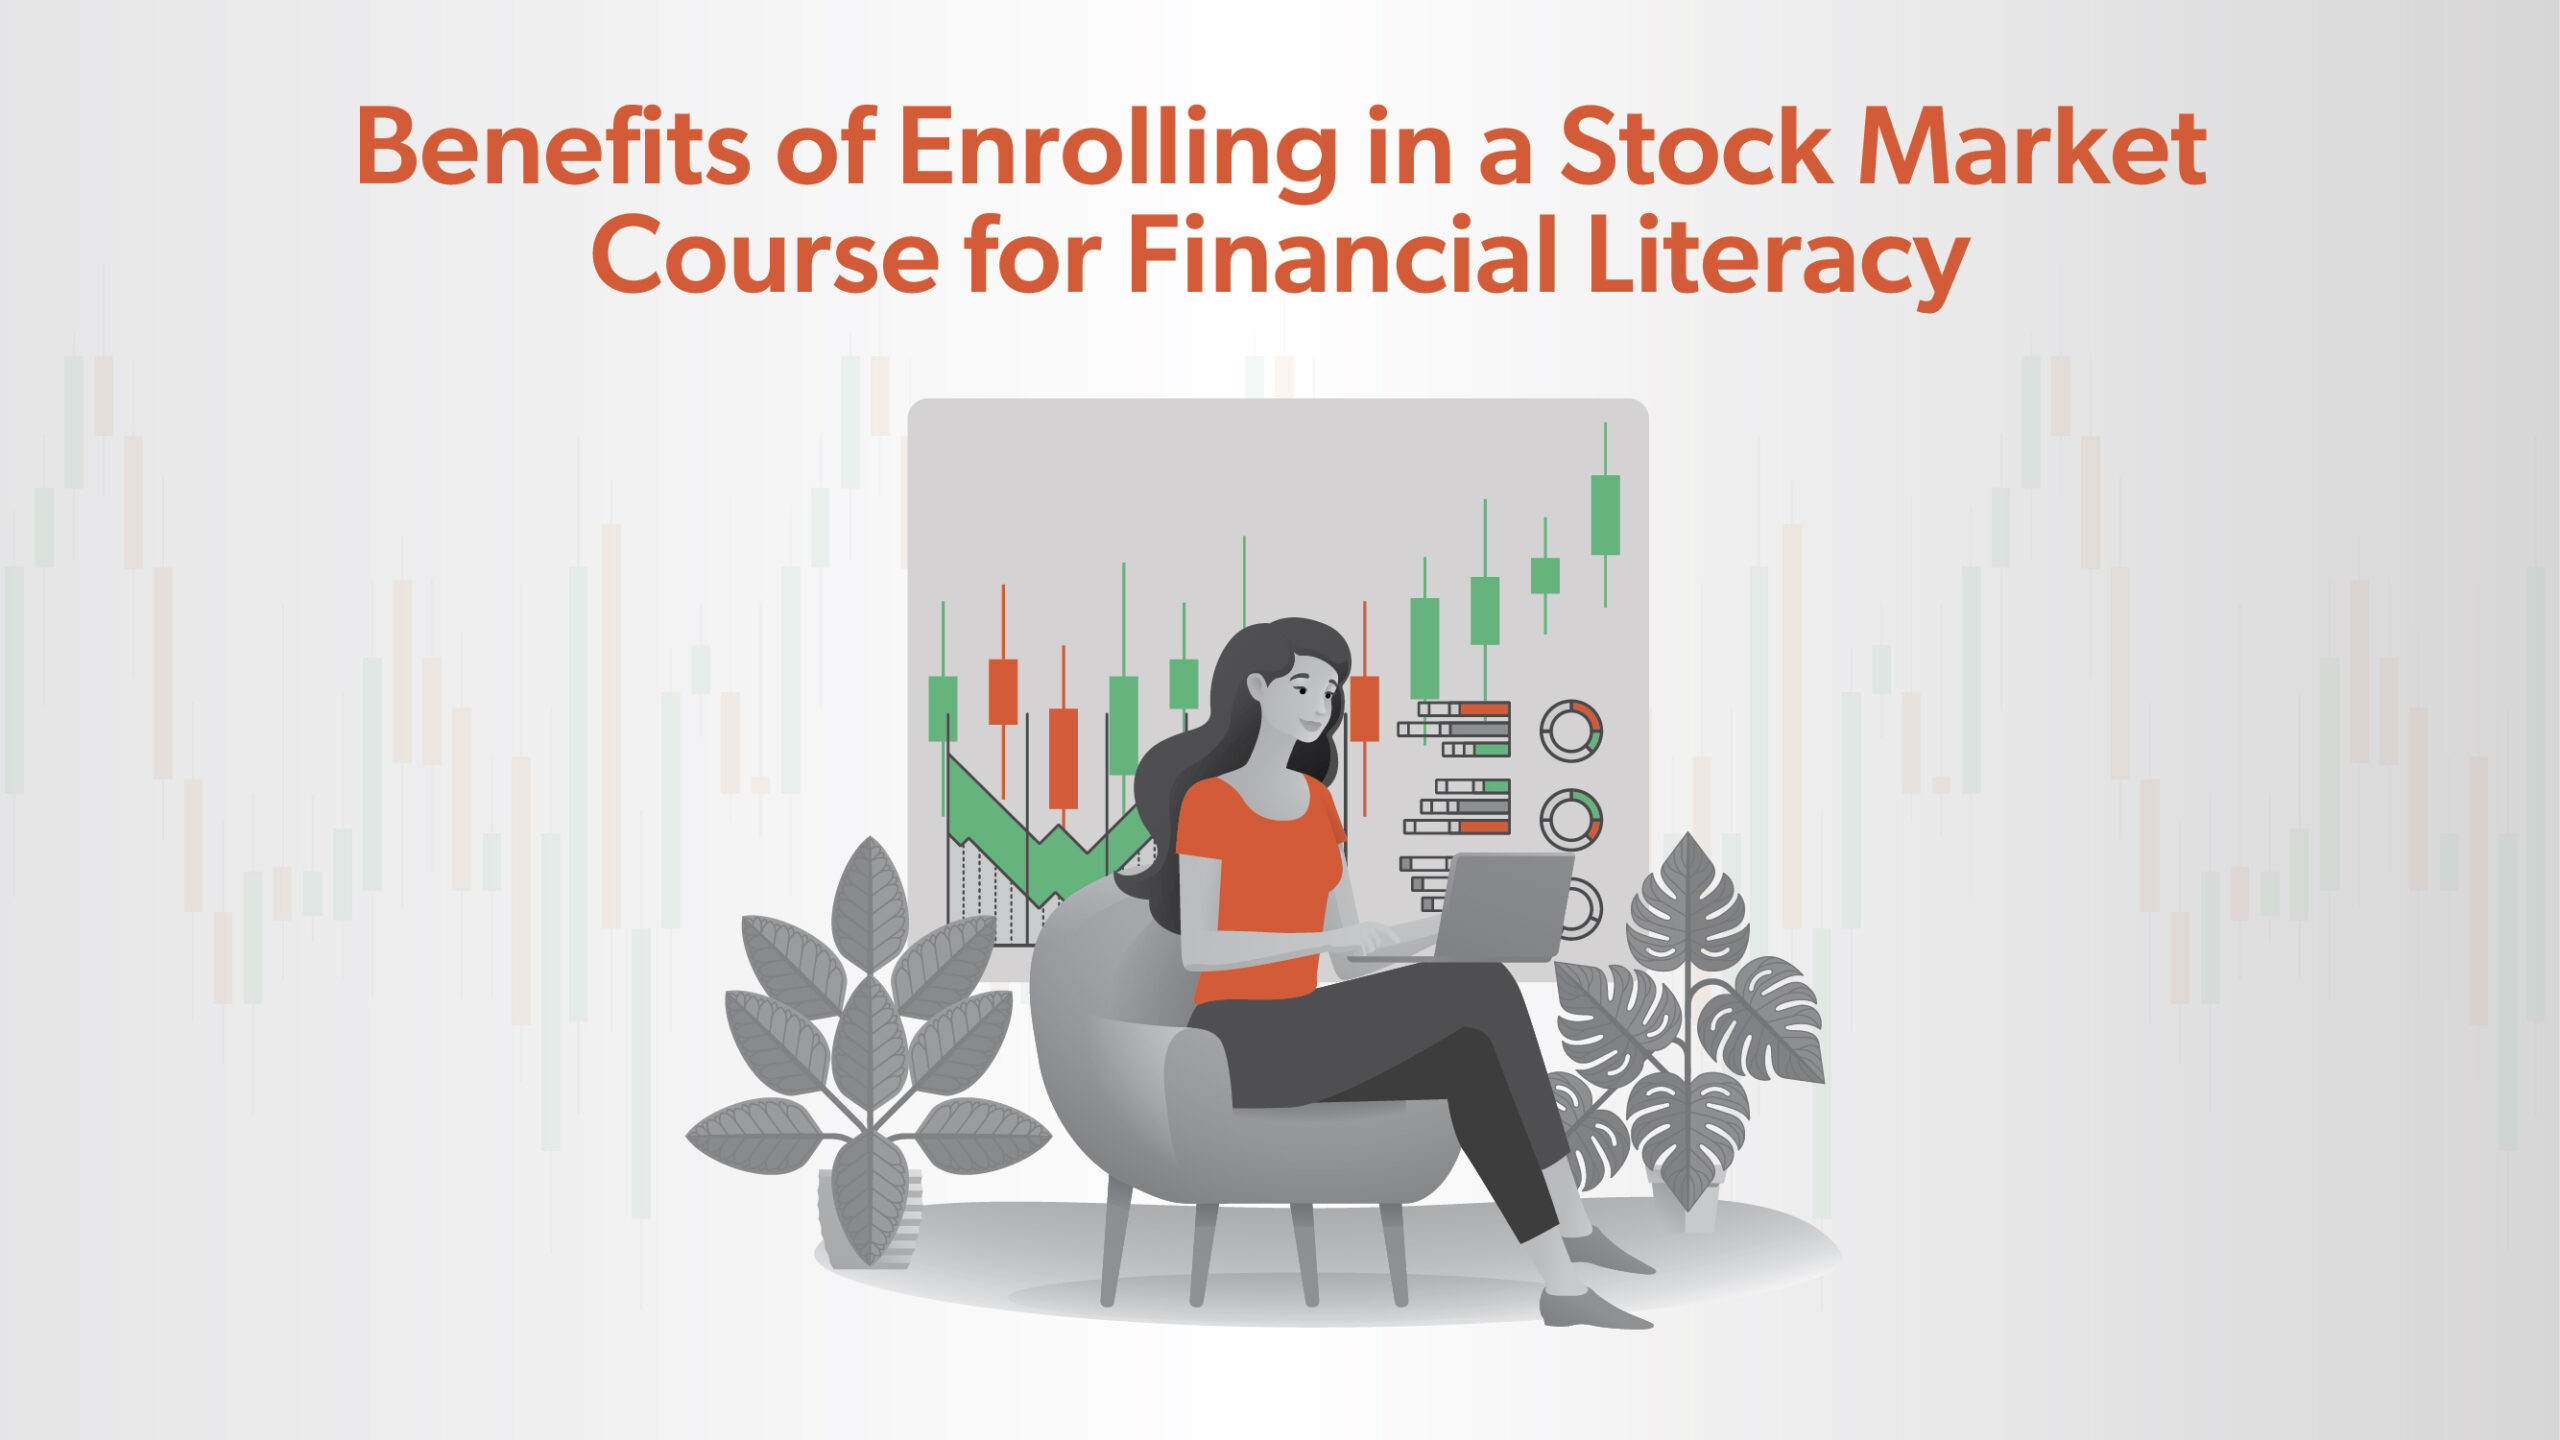 Enrolling in stock market course